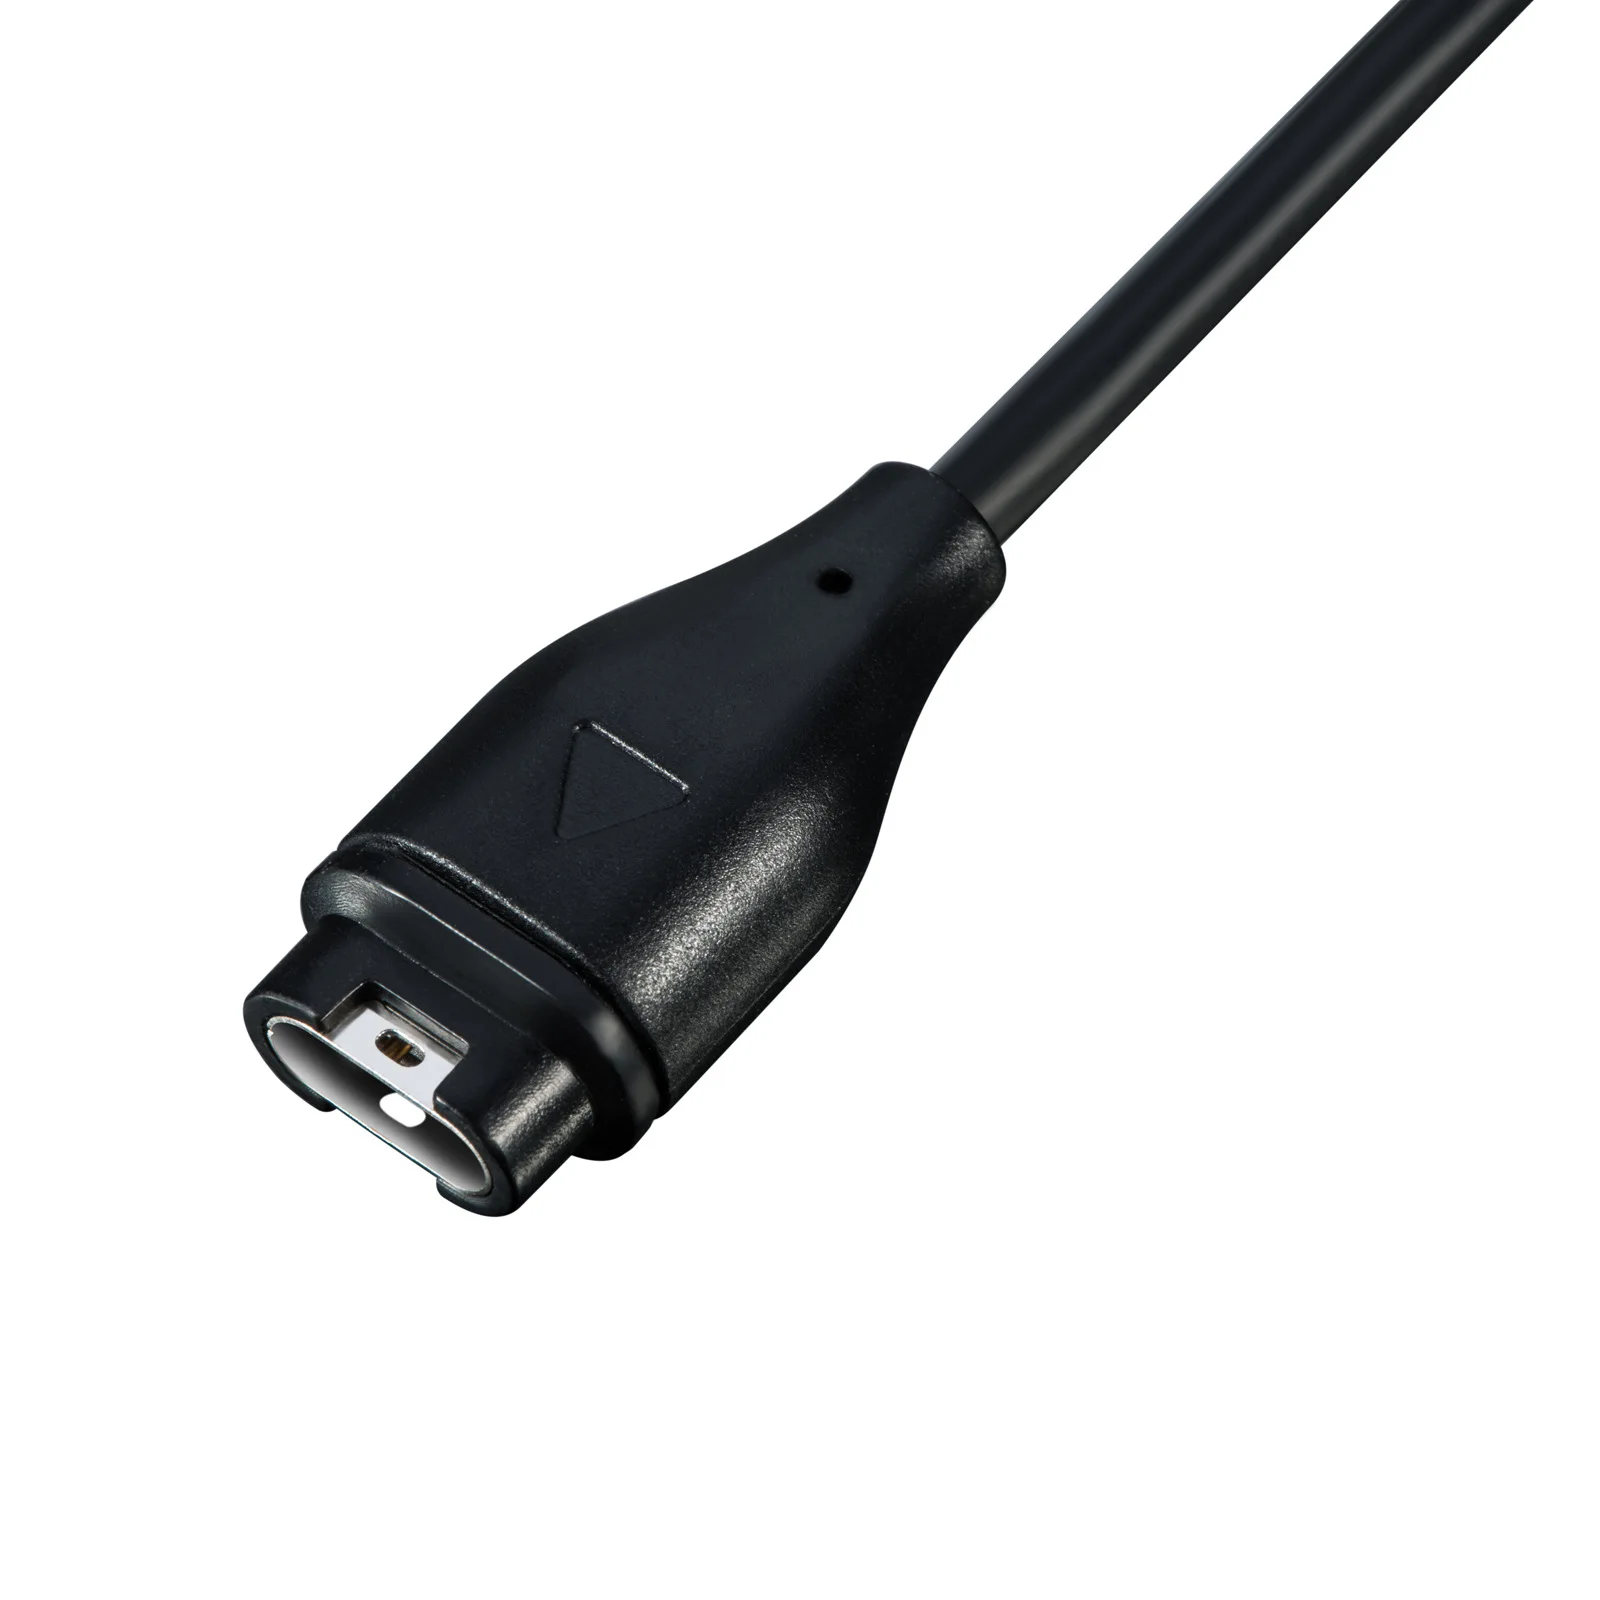 1m USB Charger For Garmin Instinct Fast Charging Cable Data Wire Cord Charge for Garmin Instinct Tactical/ Tide/ Vivoactive 3/4